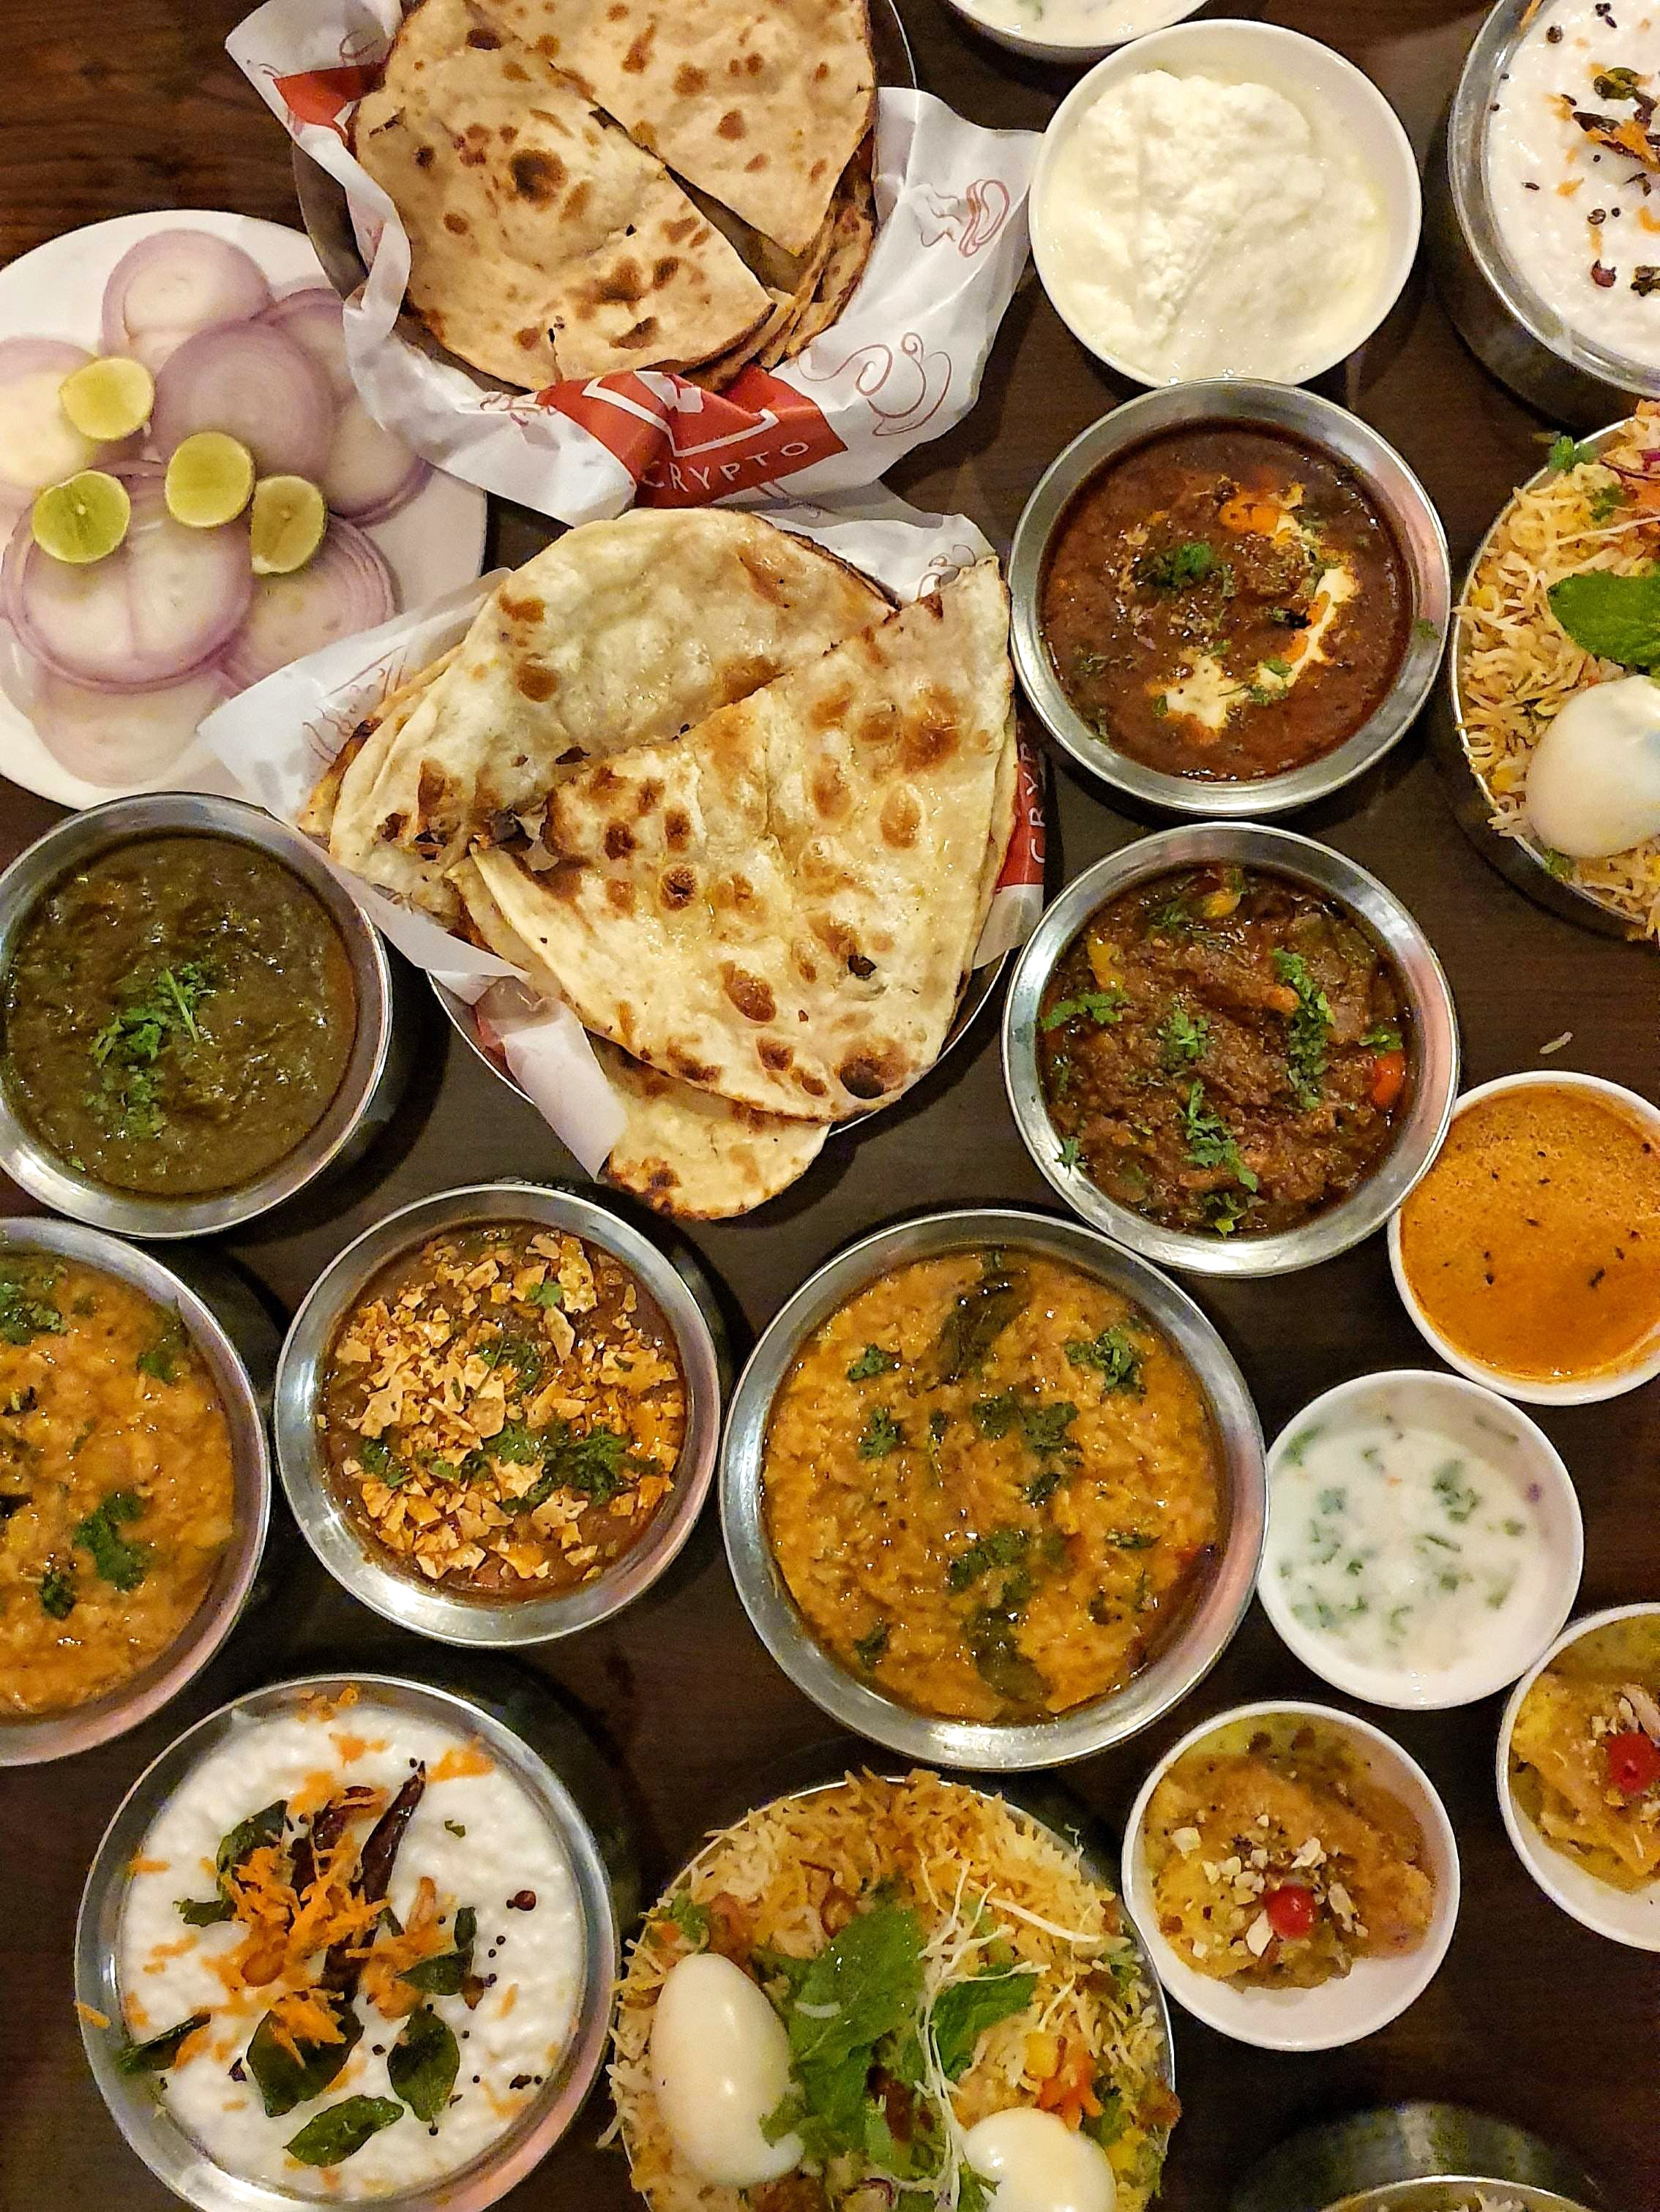 Dish,Food,Cuisine,Meal,Ingredient,Punjabi cuisine,Sindhi cuisine,Produce,Indian cuisine,Comfort food